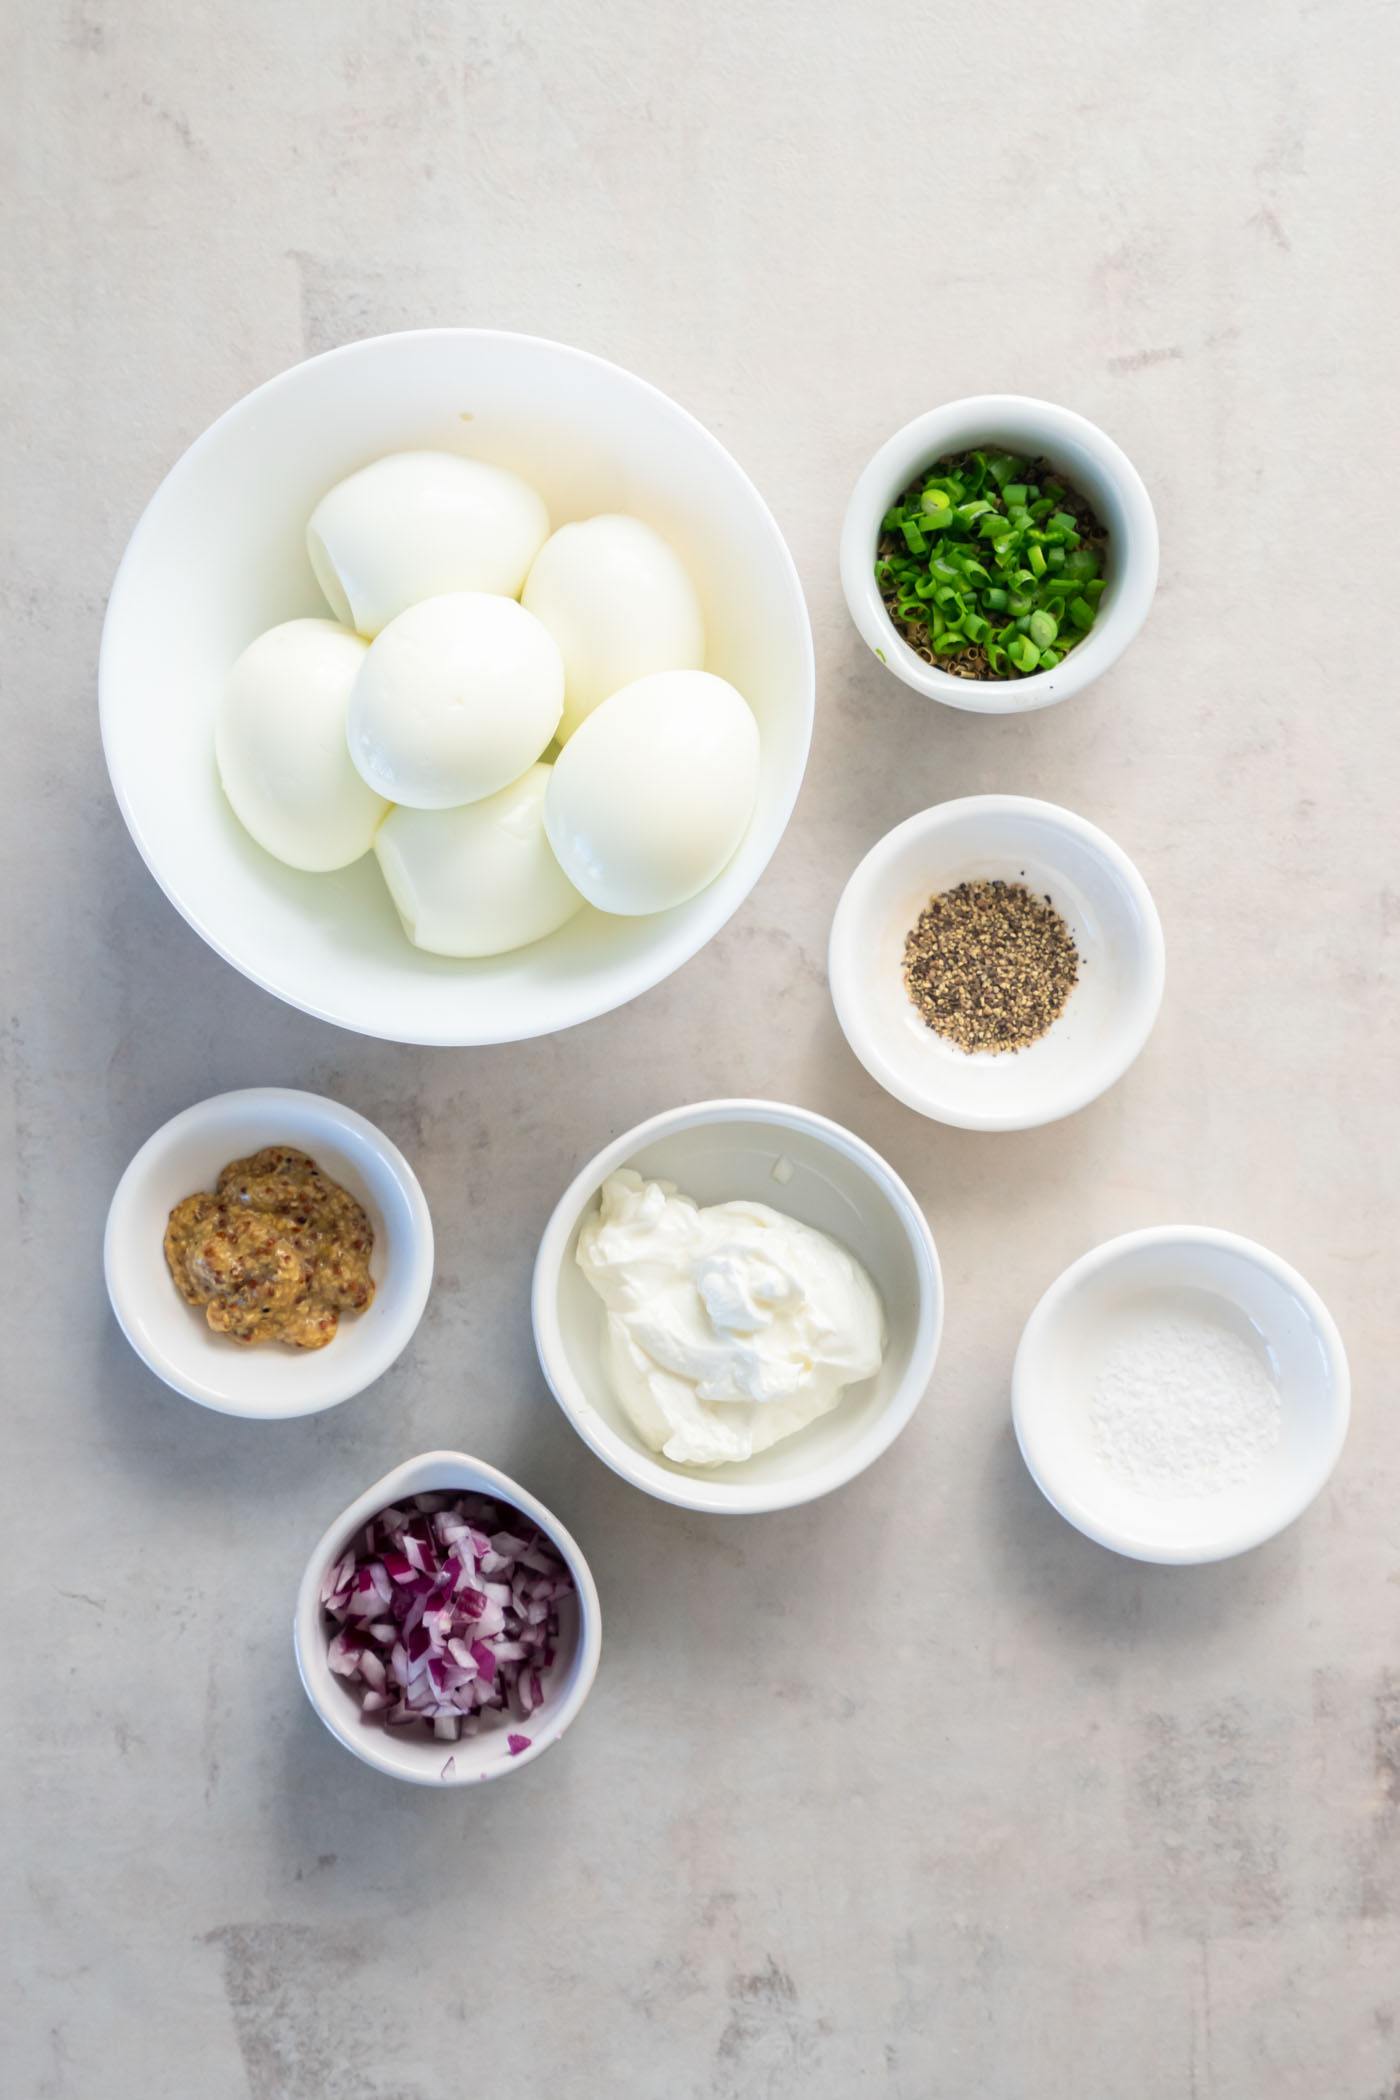 Ingredients for egg salad recipe.